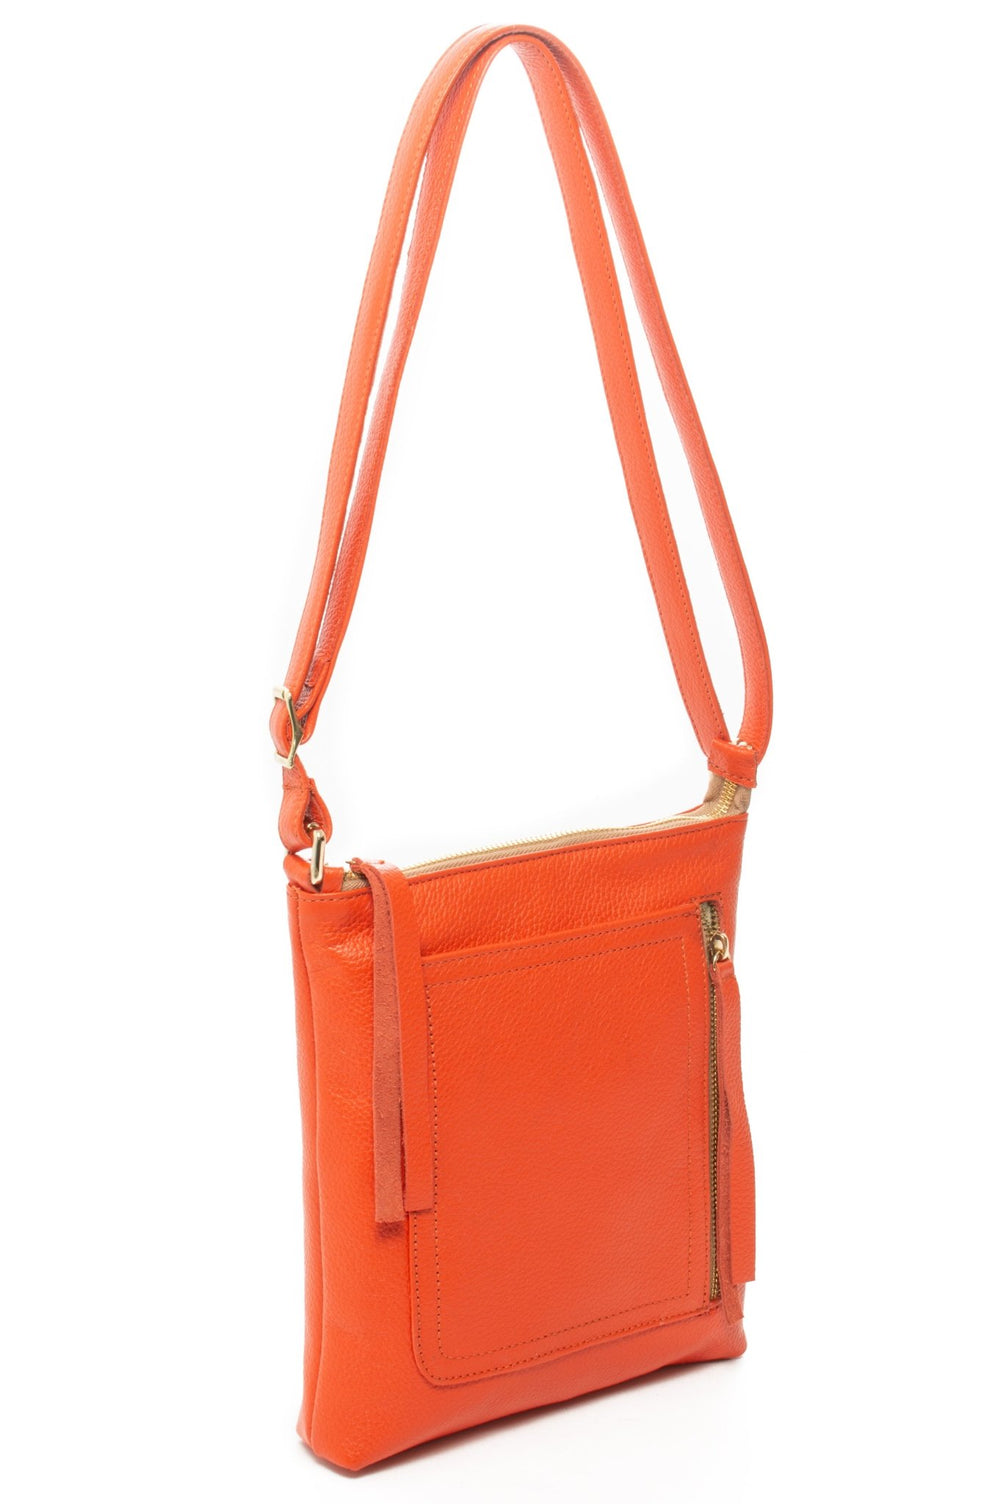 EMMA Orange - Carla Mancini Handbags